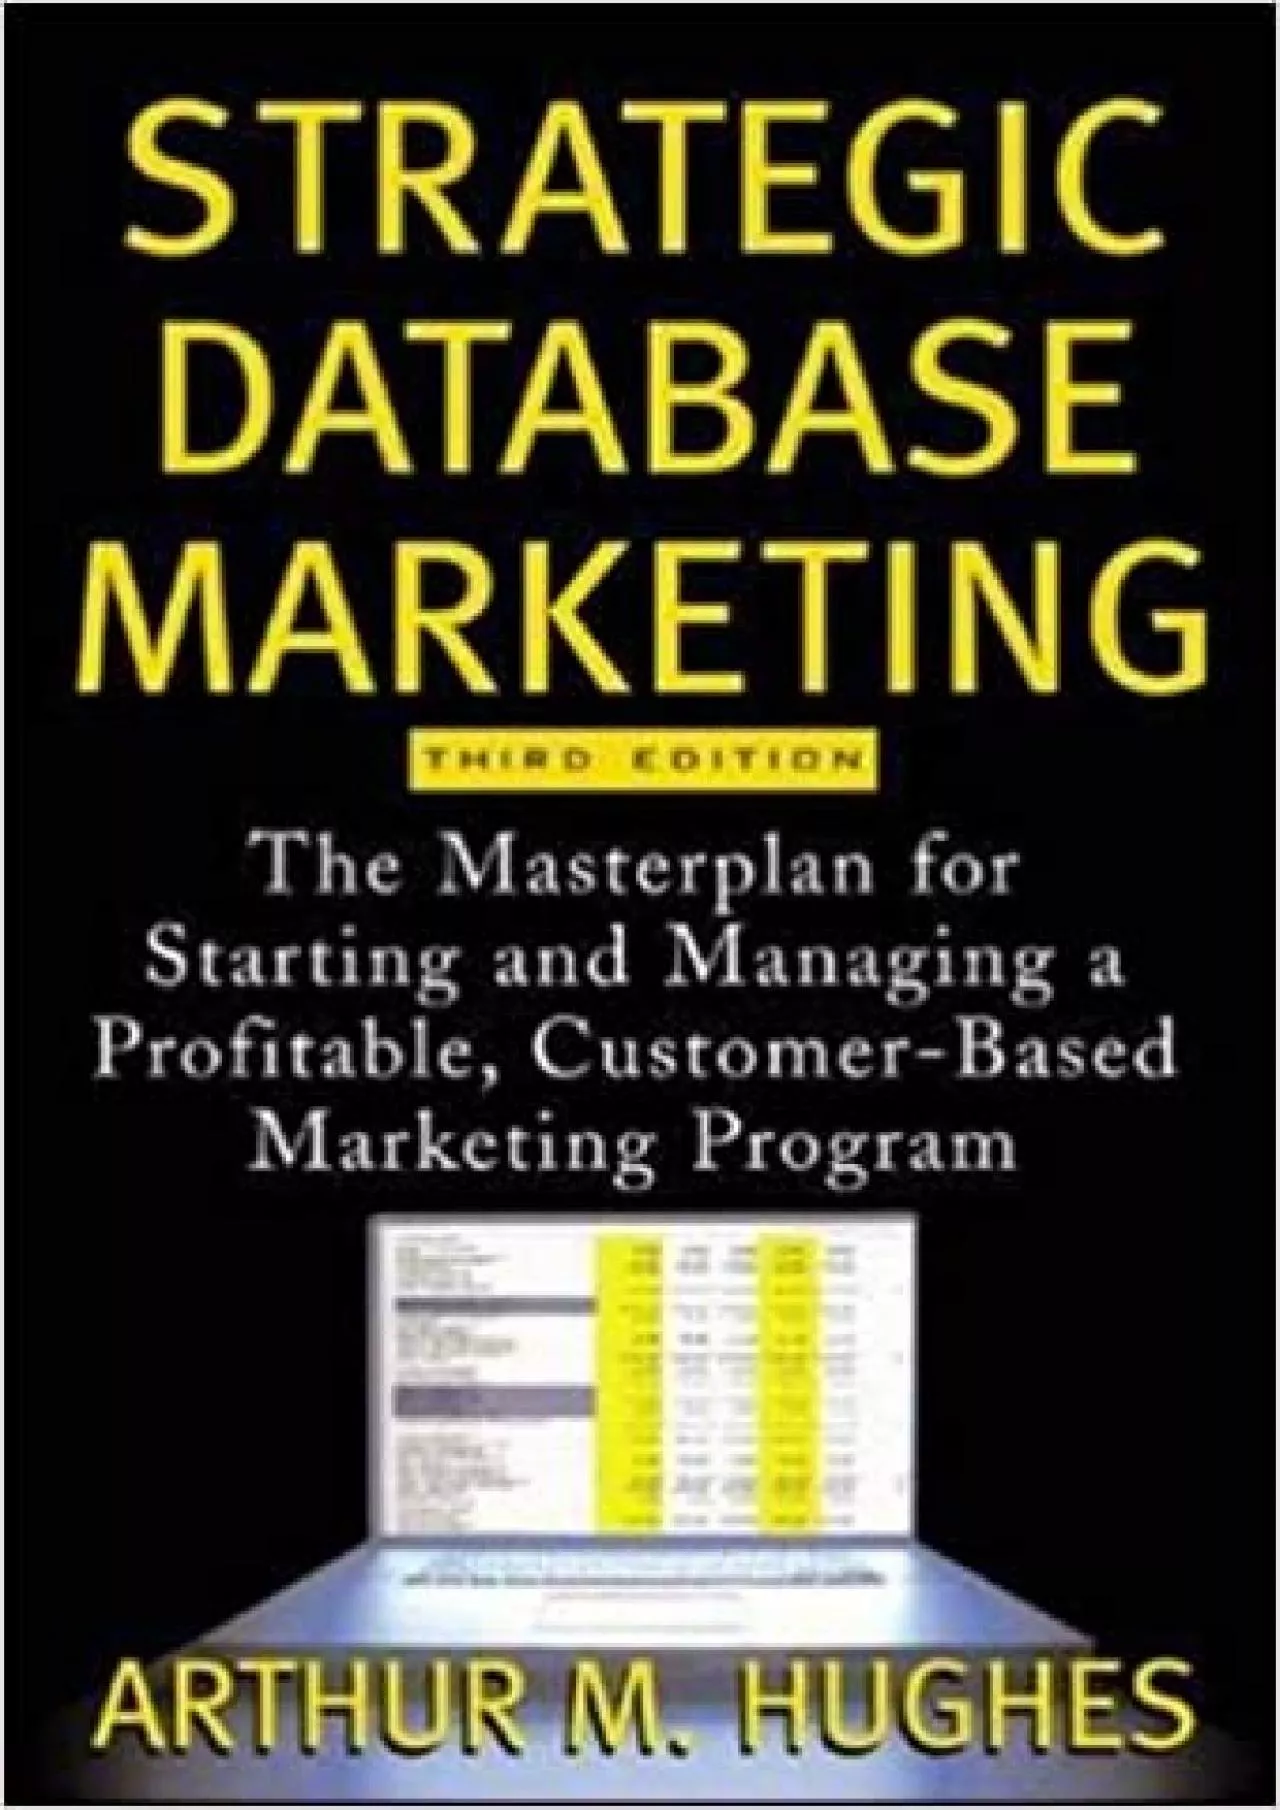 Strategic Database Marketing The Masterplan for Starting and Managing a Profitable, Customer-Based